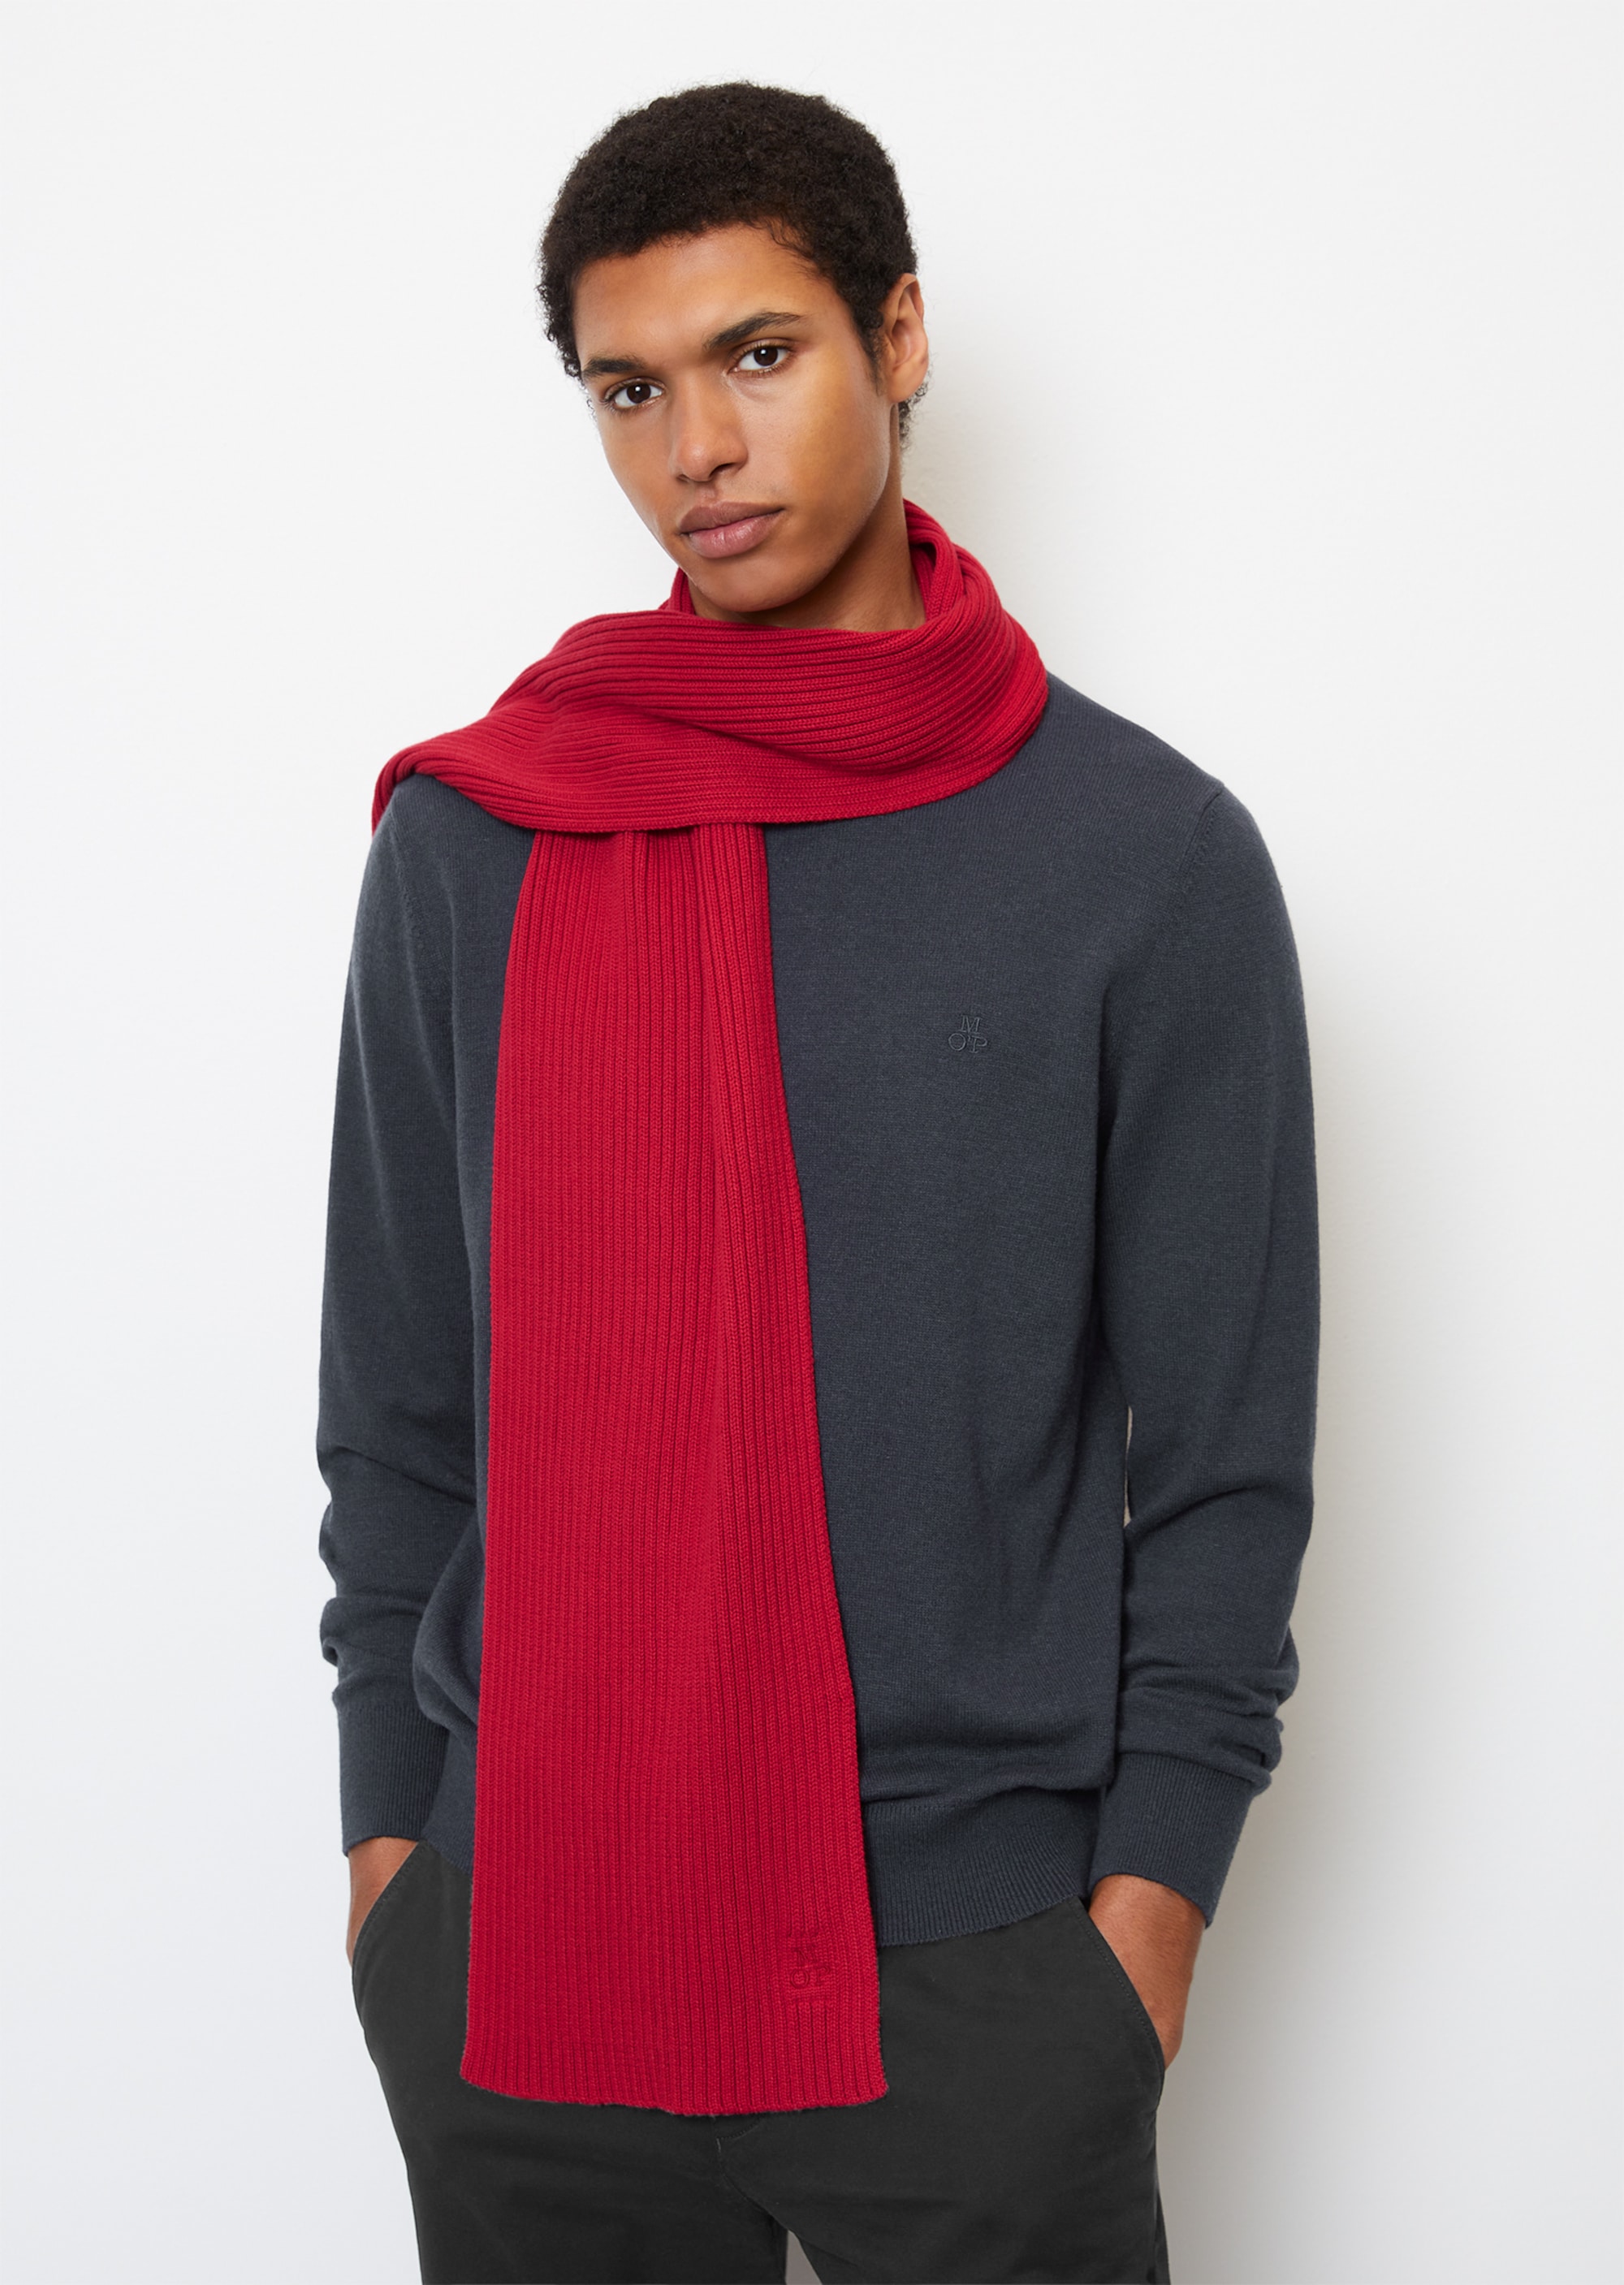 Schal aus Bio-Baumwolle und Kaschmir - rot | Schals | MARC O\'POLO | Modeschals